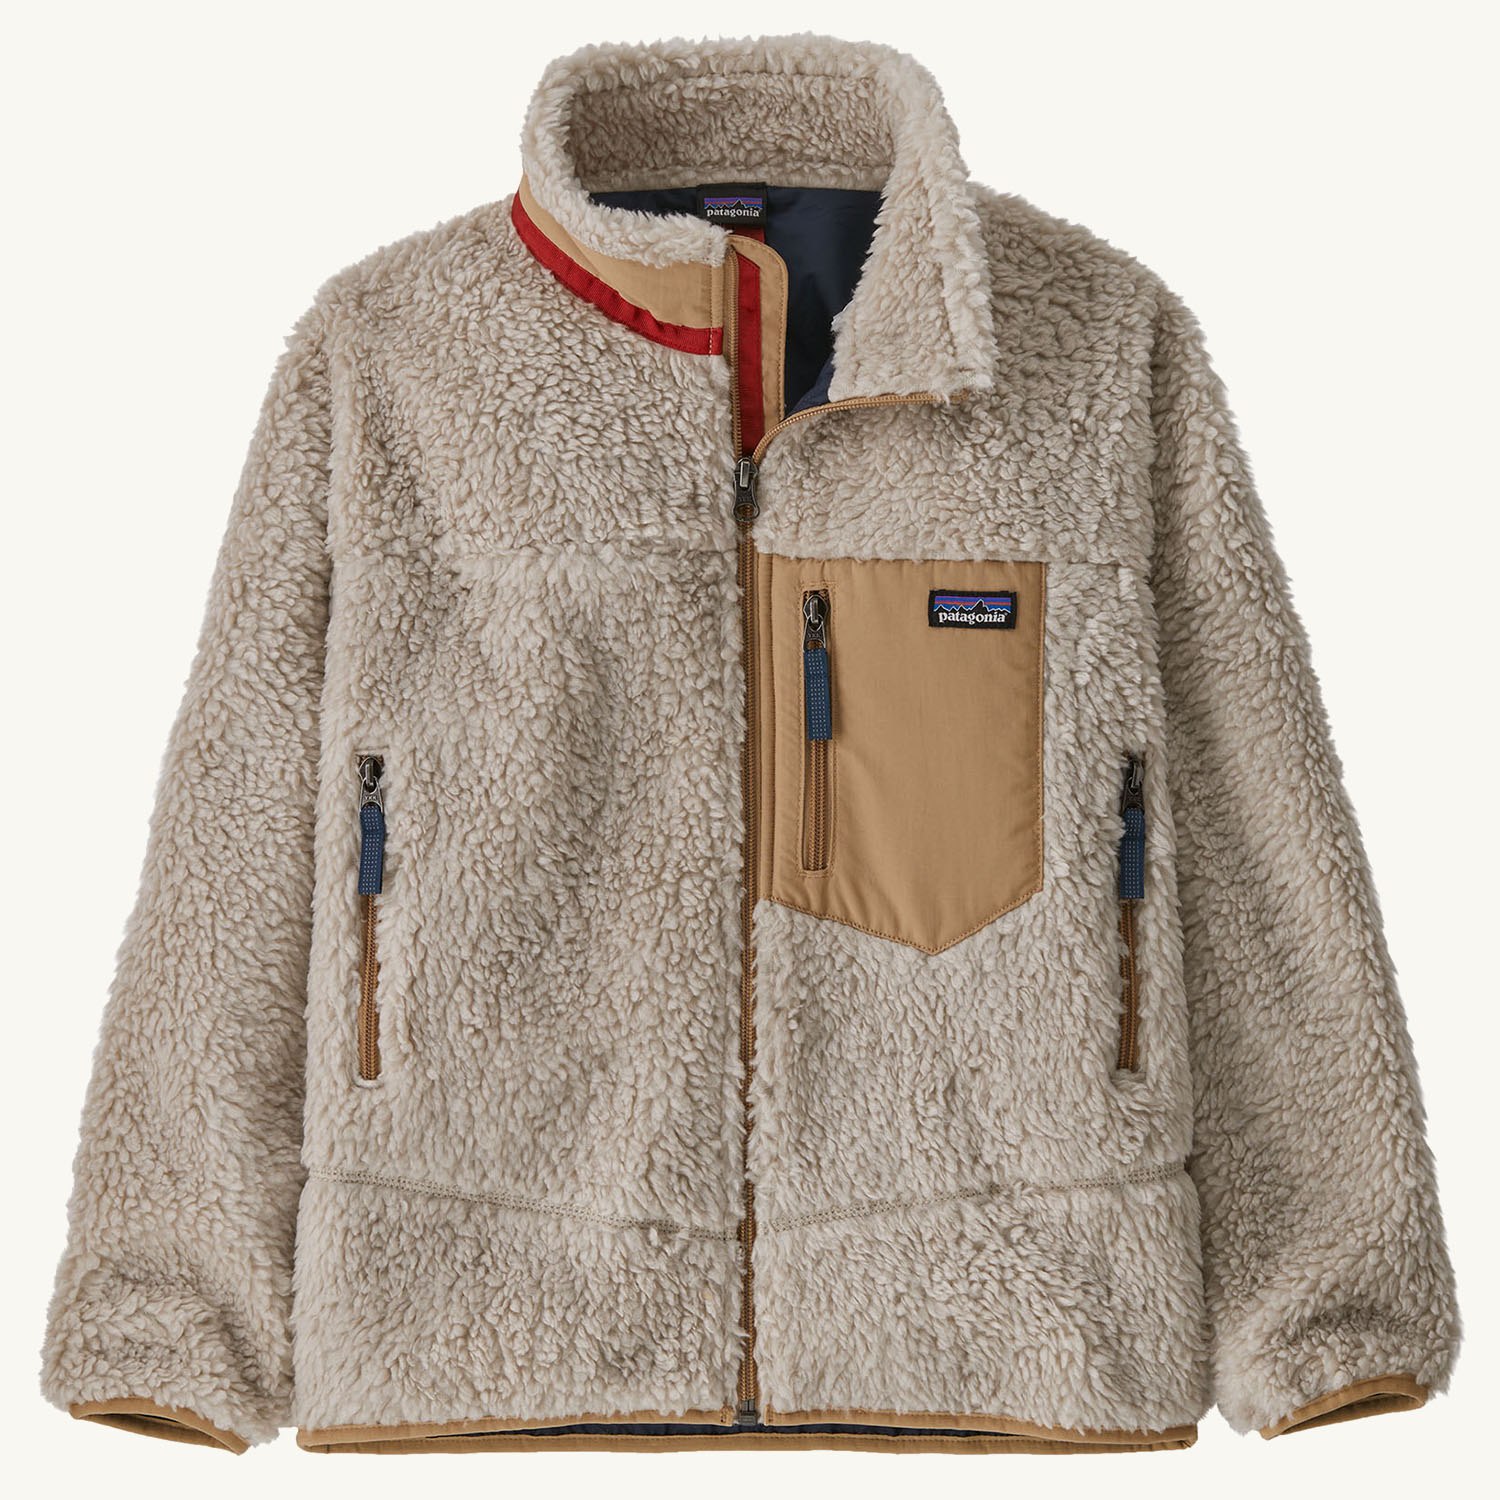 Patagonia Retro X Full Zip Women's Fleece Sweater Jacket Size